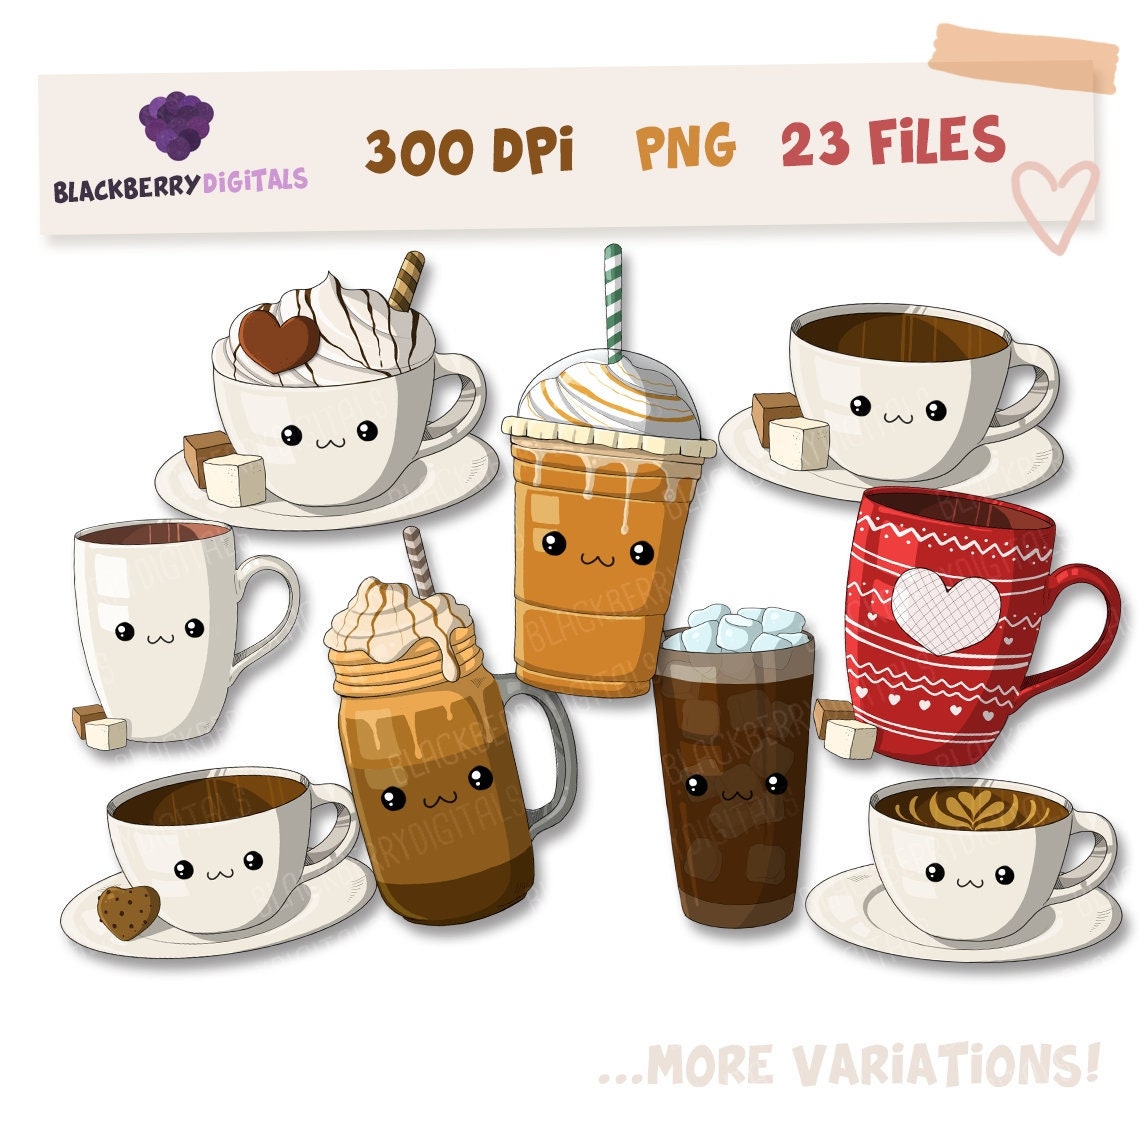 Cute Coffee and Tea Cups Clip Art Set – Daily Art Hub // Graphics